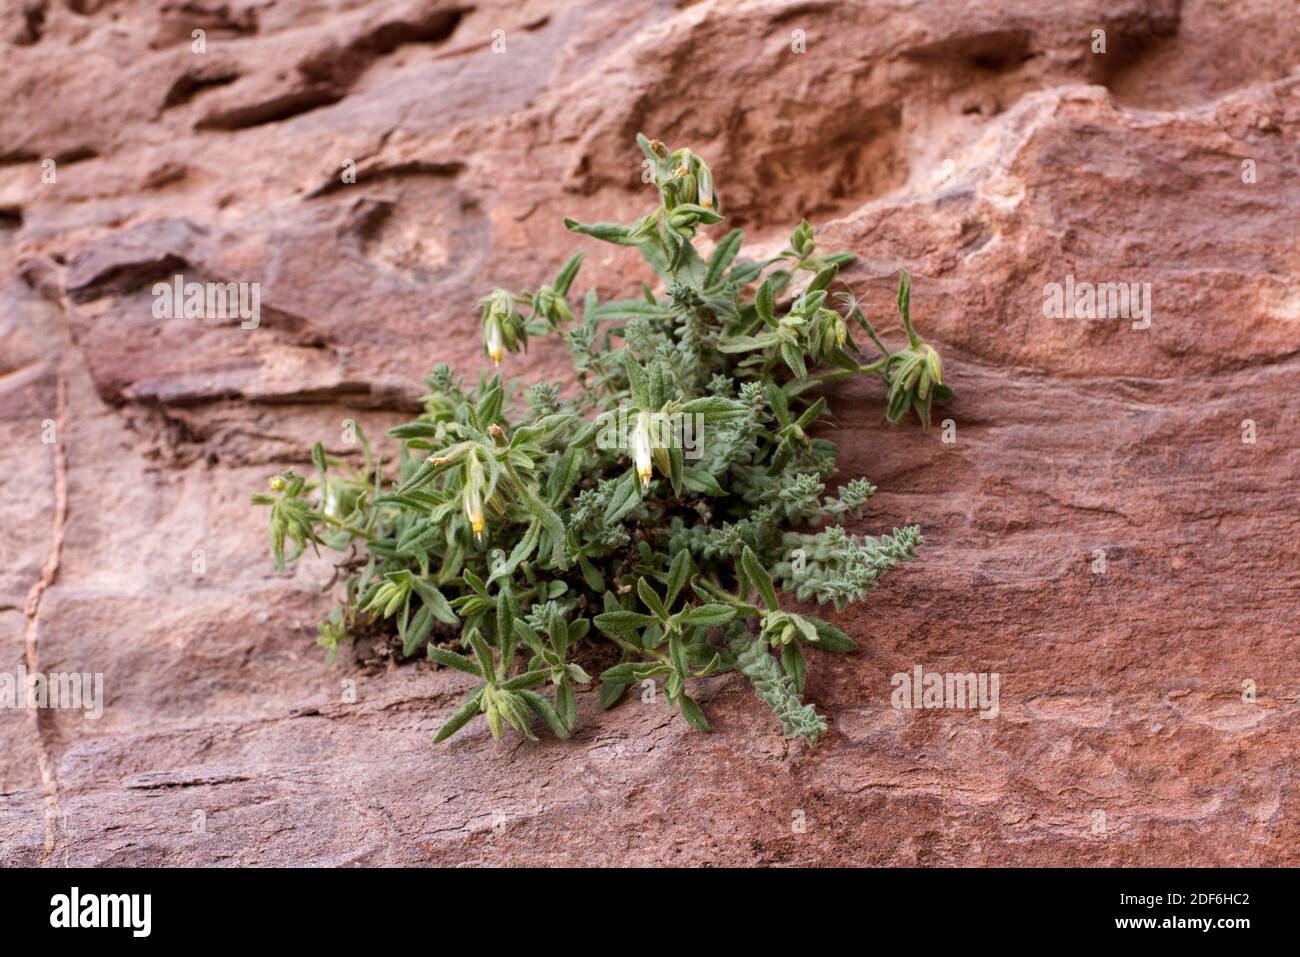 Golden drop (Podonosma orientalis or Onosma orientalis) is a perennial herb that grows on rocks and crevices. This photo was taken in Petra, Jordan. Stock Photo